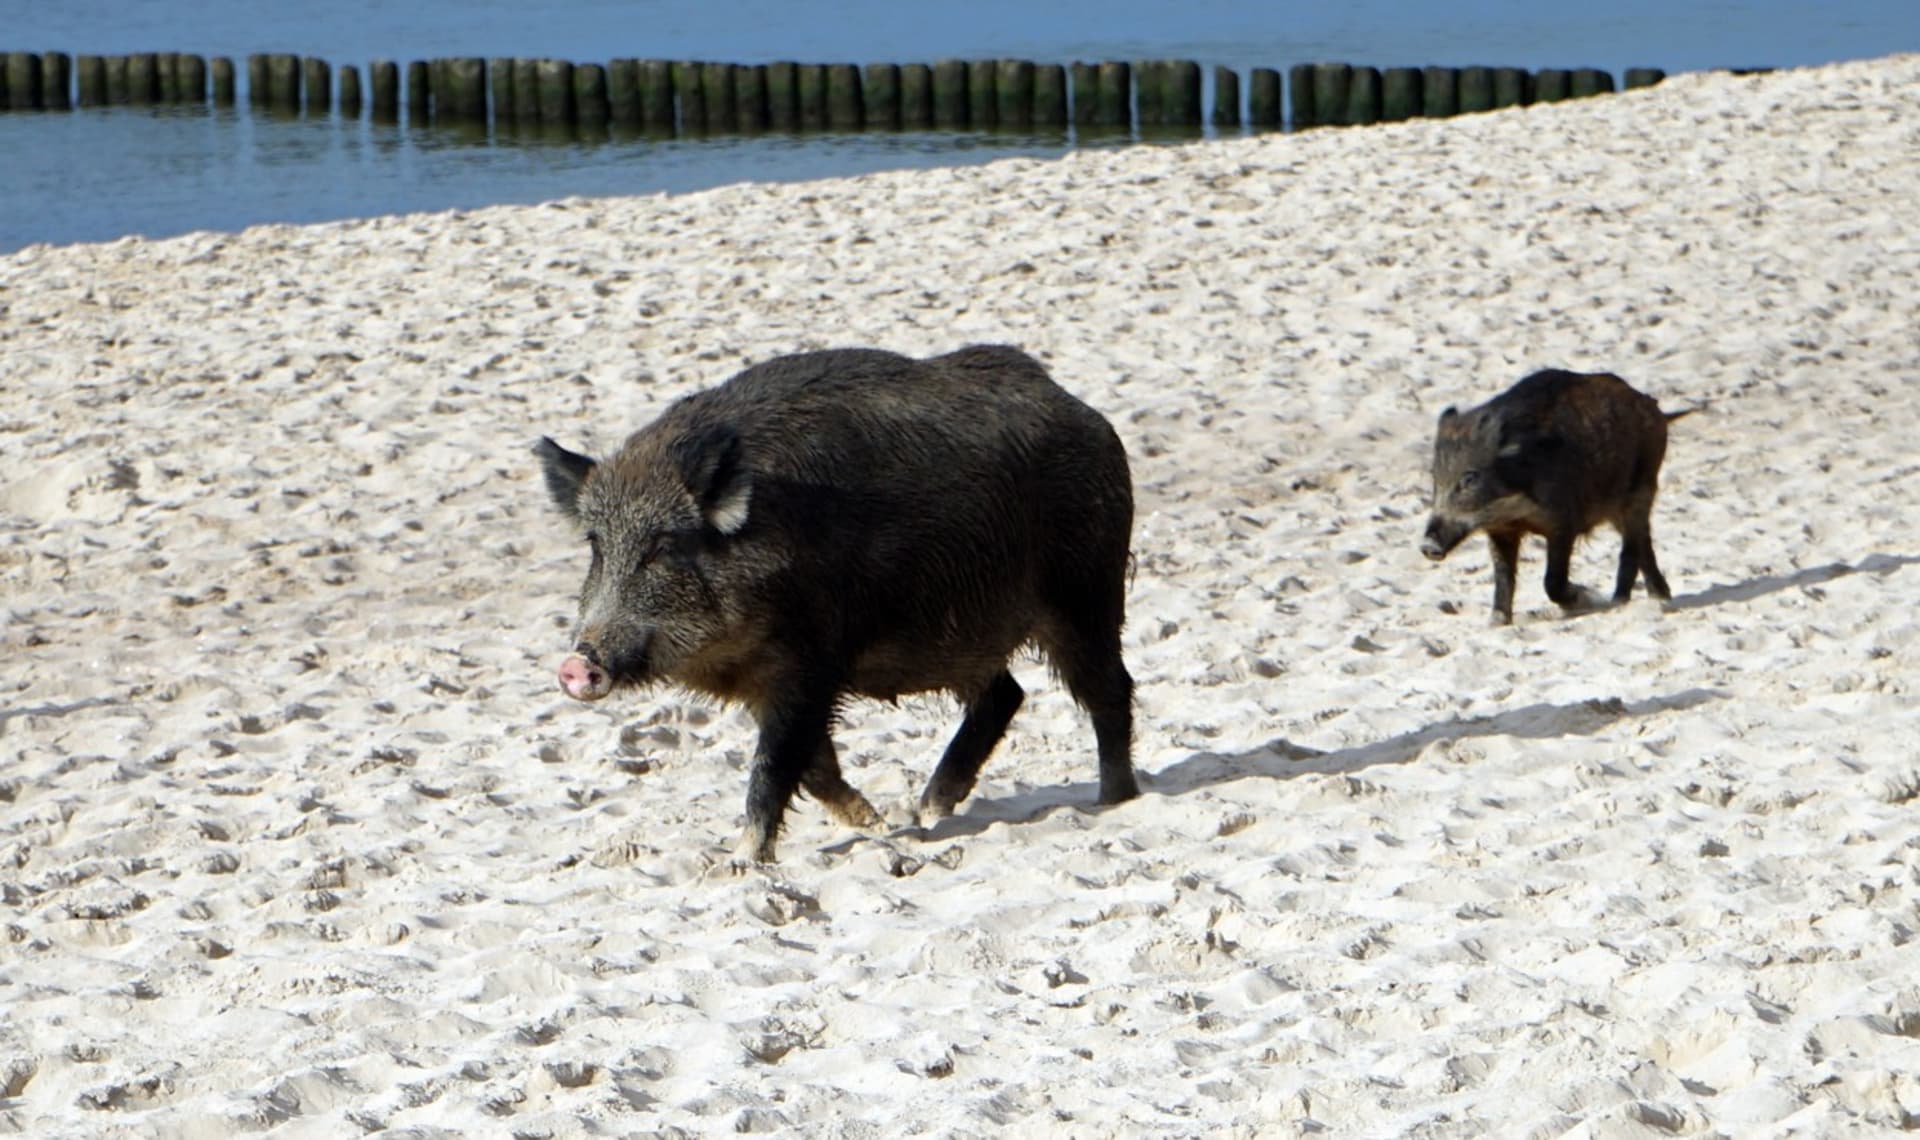 Divoká prasata se objevila i na pláži v Polsku, a to v roce 2020.